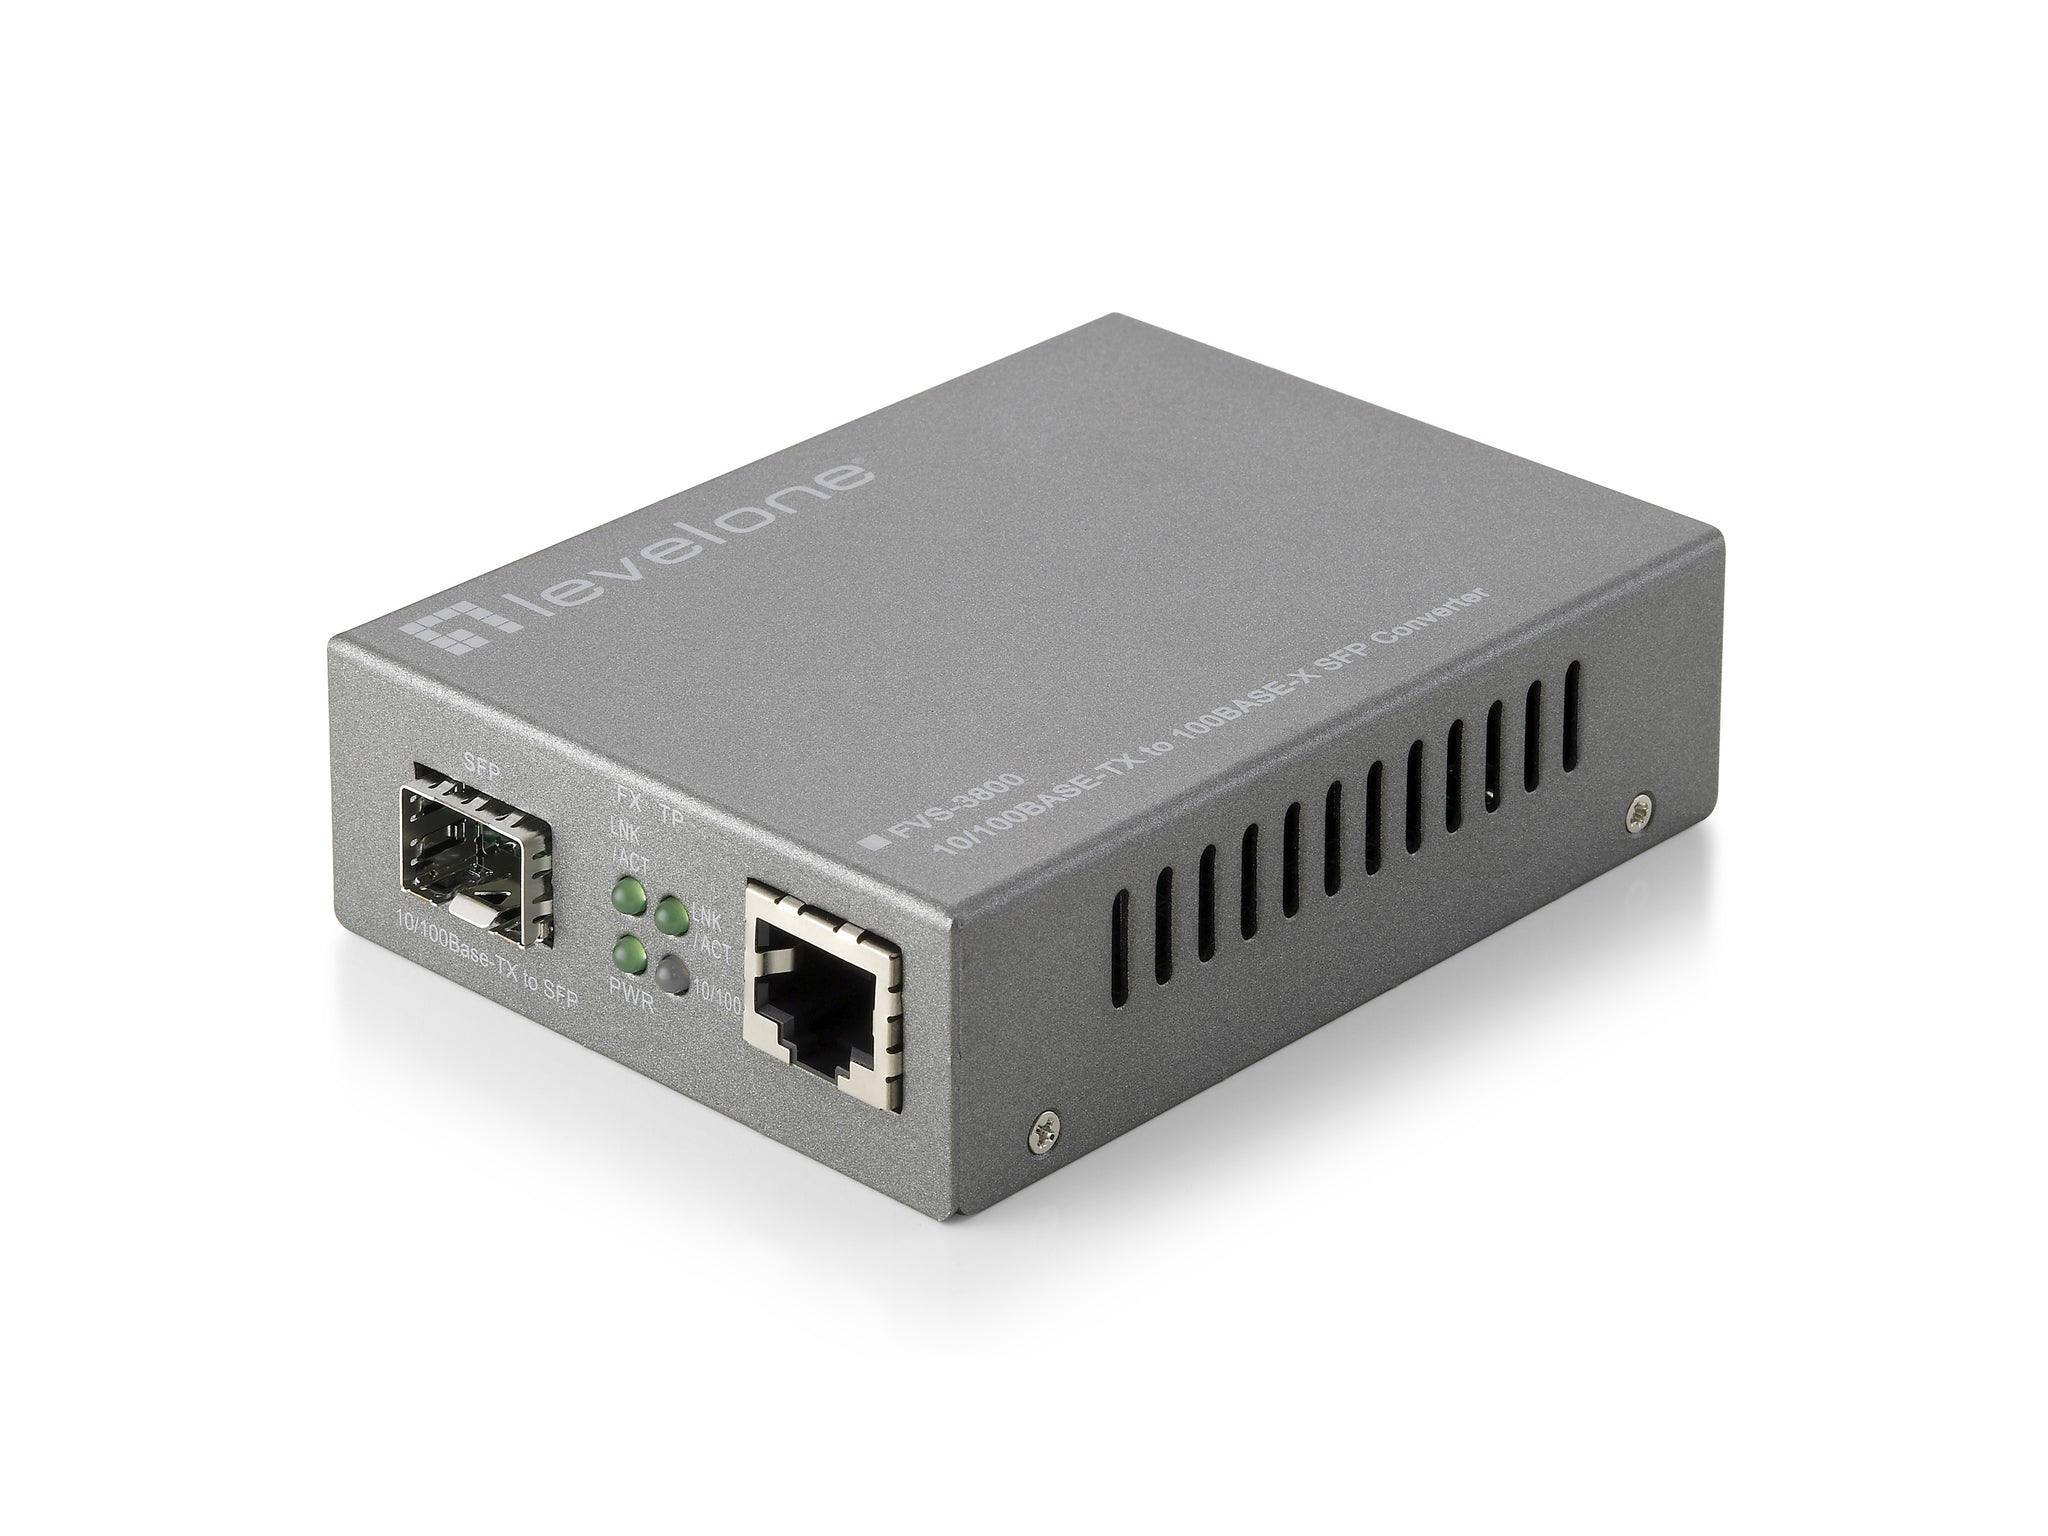 FVS-3800 10/100BASE-TX/X SFP SMART CONVERTER